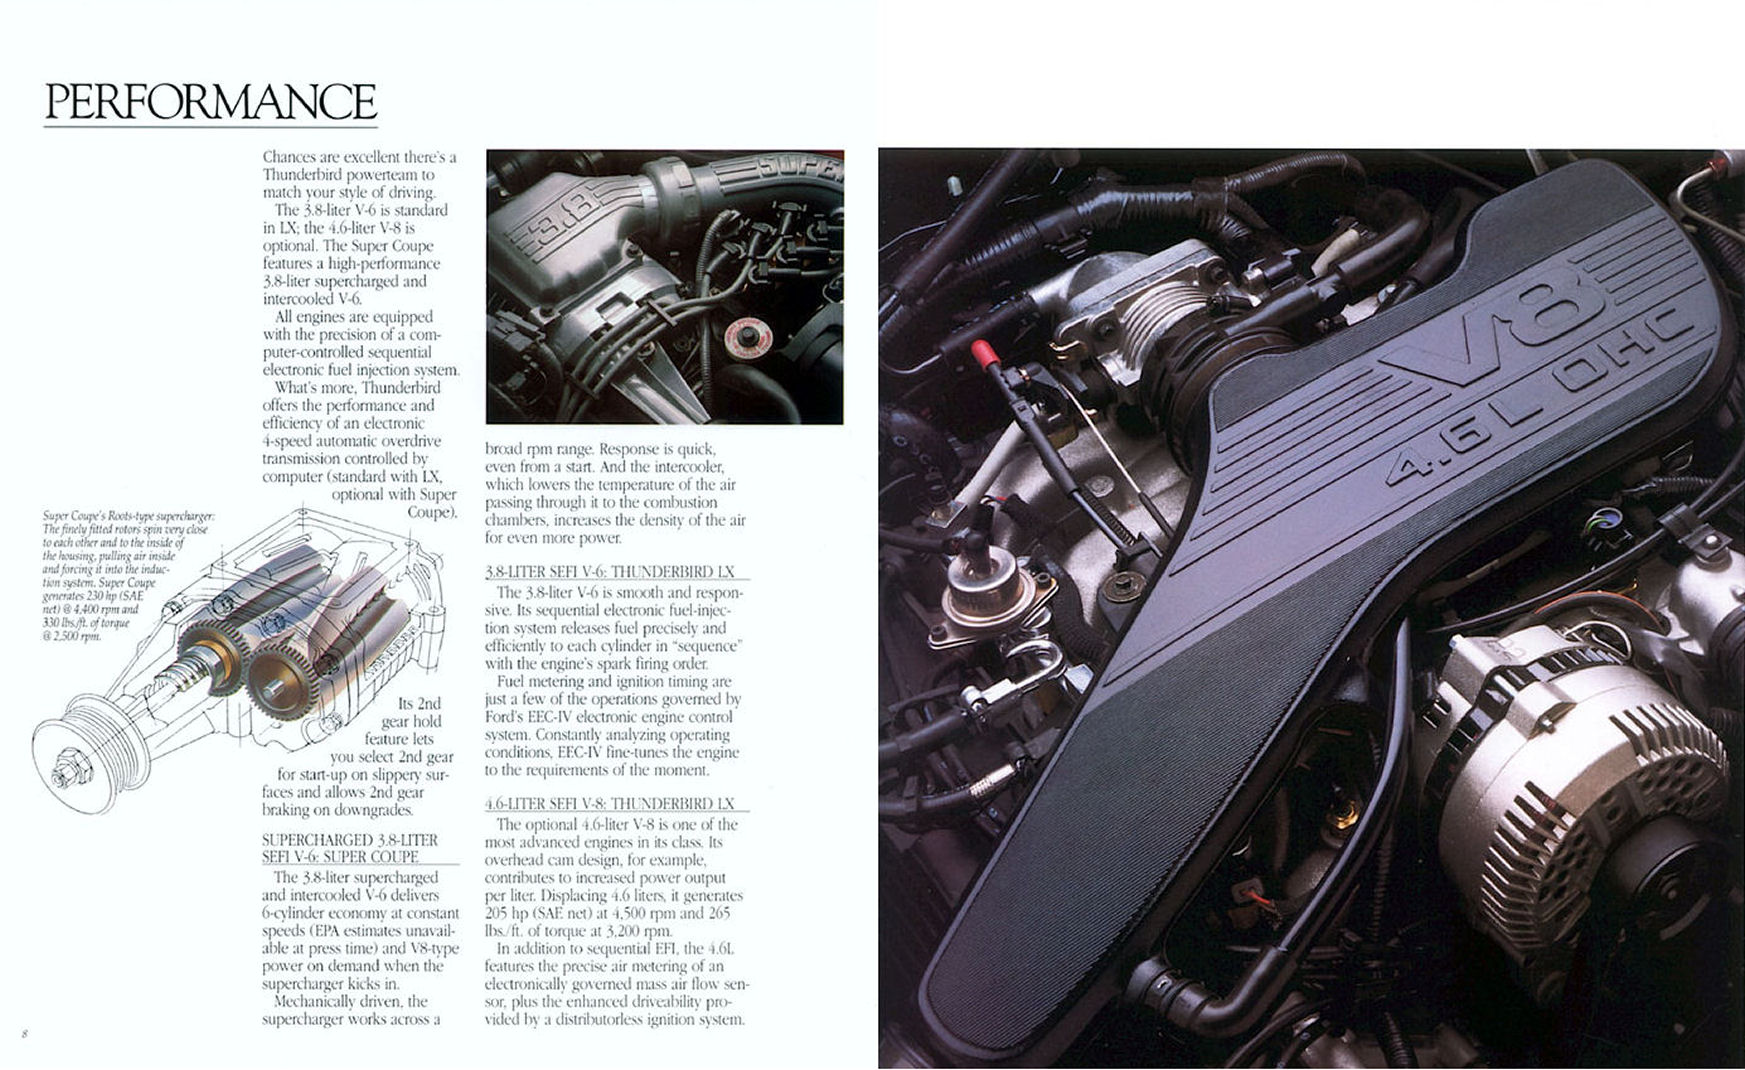 1995_Ford_Thunderbird-08-09